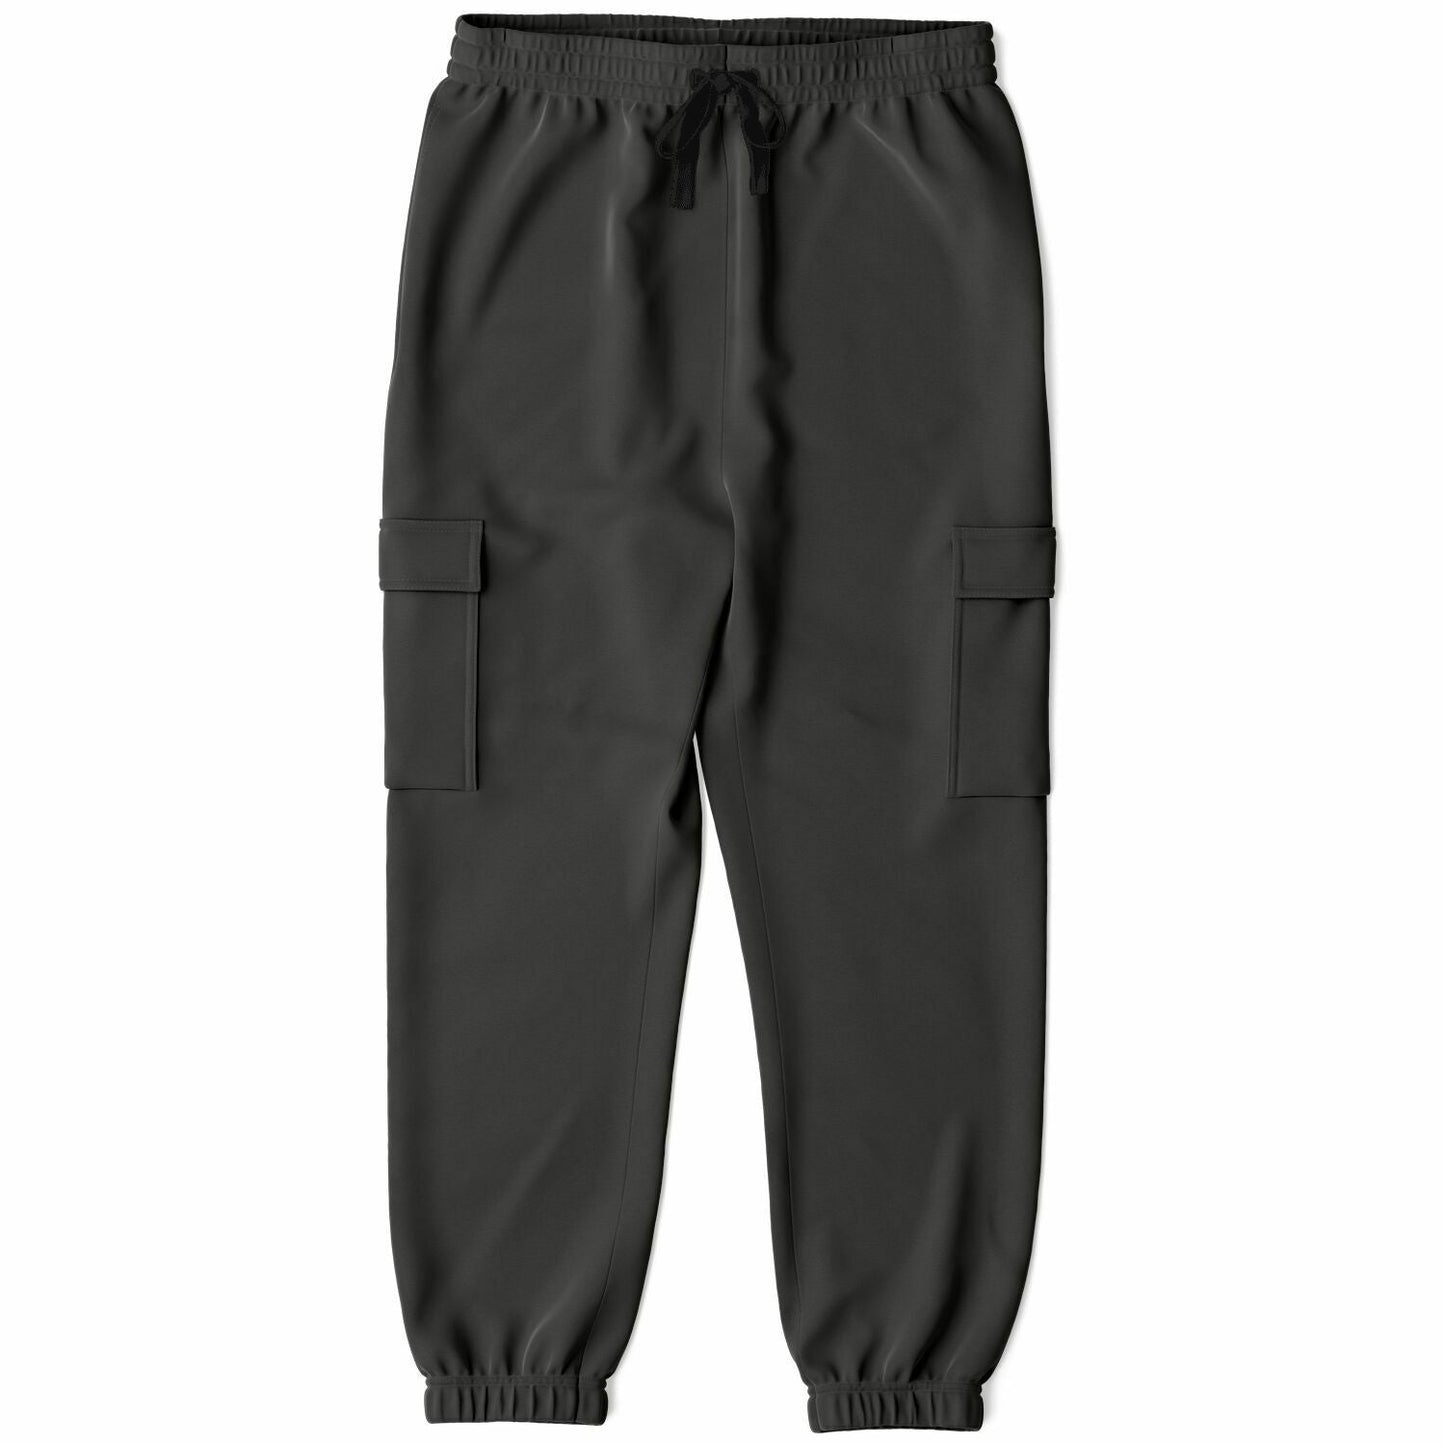 Gym Ready Cargo Sweatpants - Charcoal Black / XS - Sport Finesse